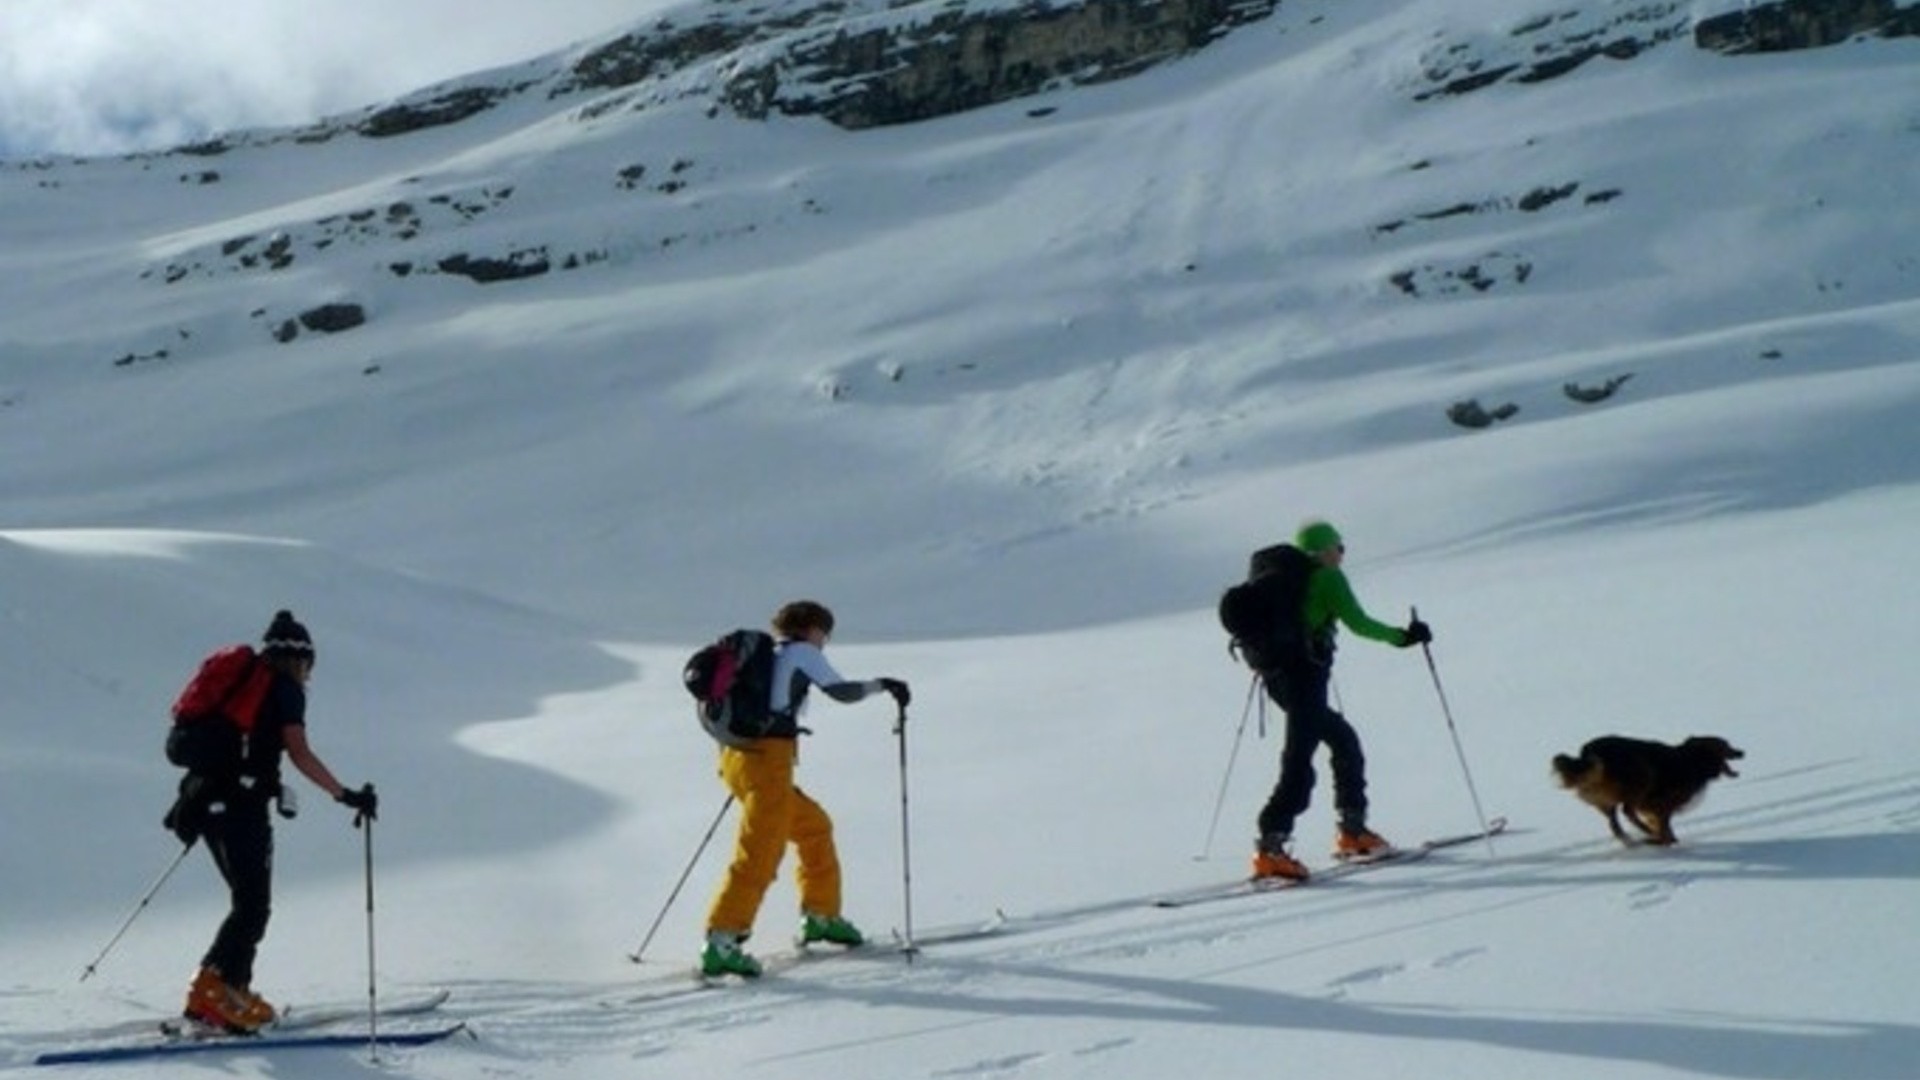 Ski mountaineering in the Dolomites - Cortina d'Ampezzo